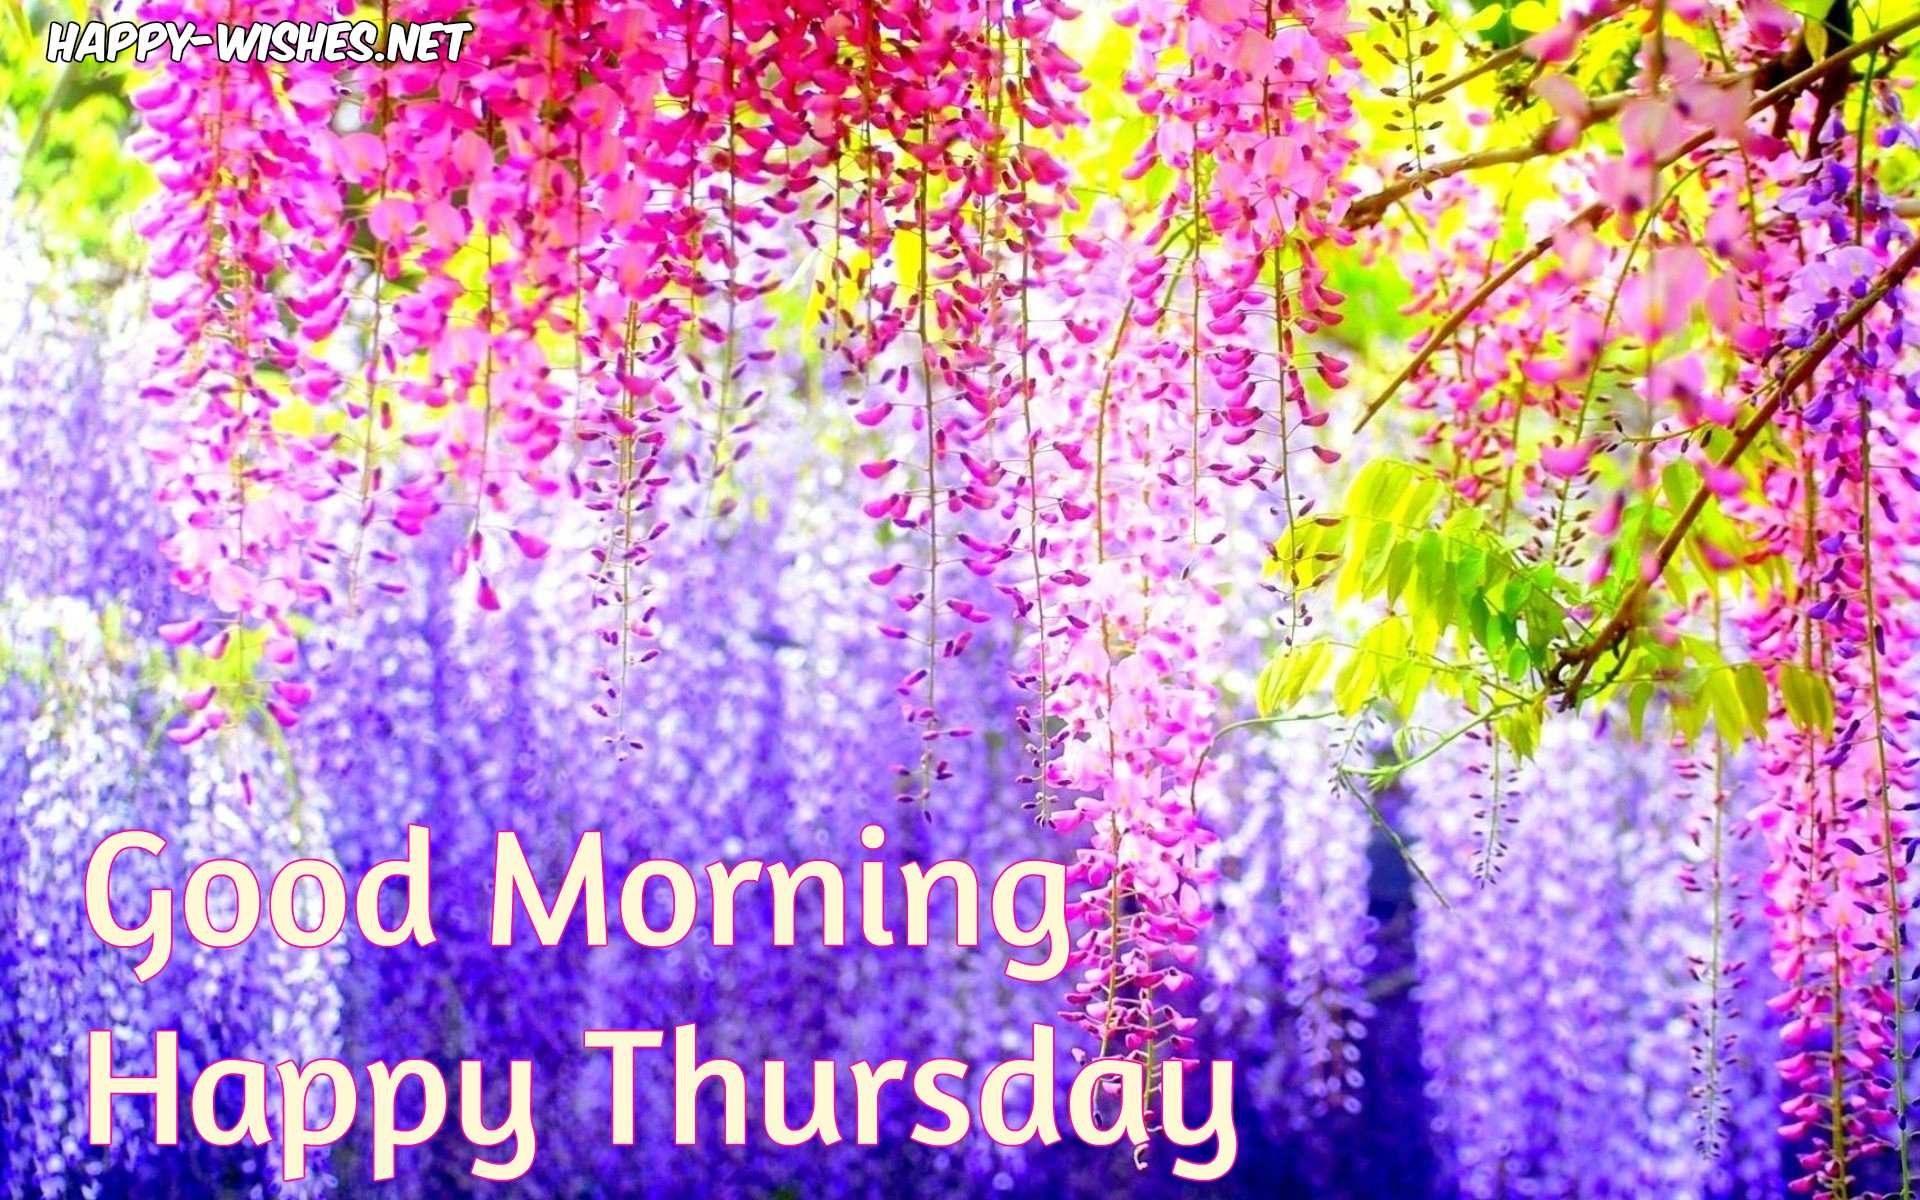 Good Morning Wishes On Thursday Morning Thursday Wishes